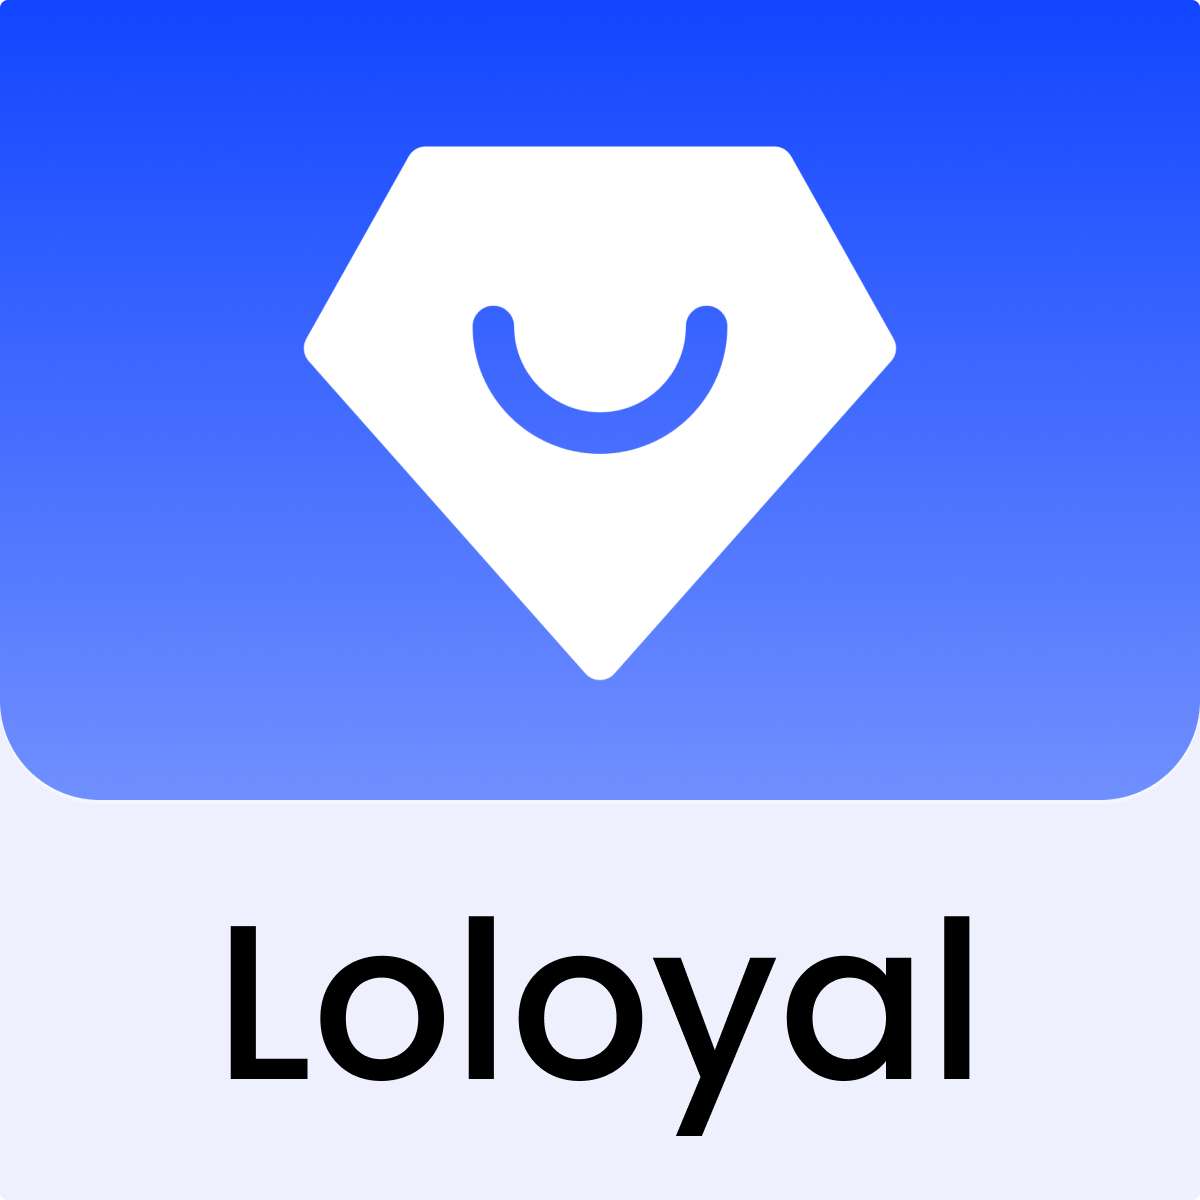 Loloyal Loyalty logo